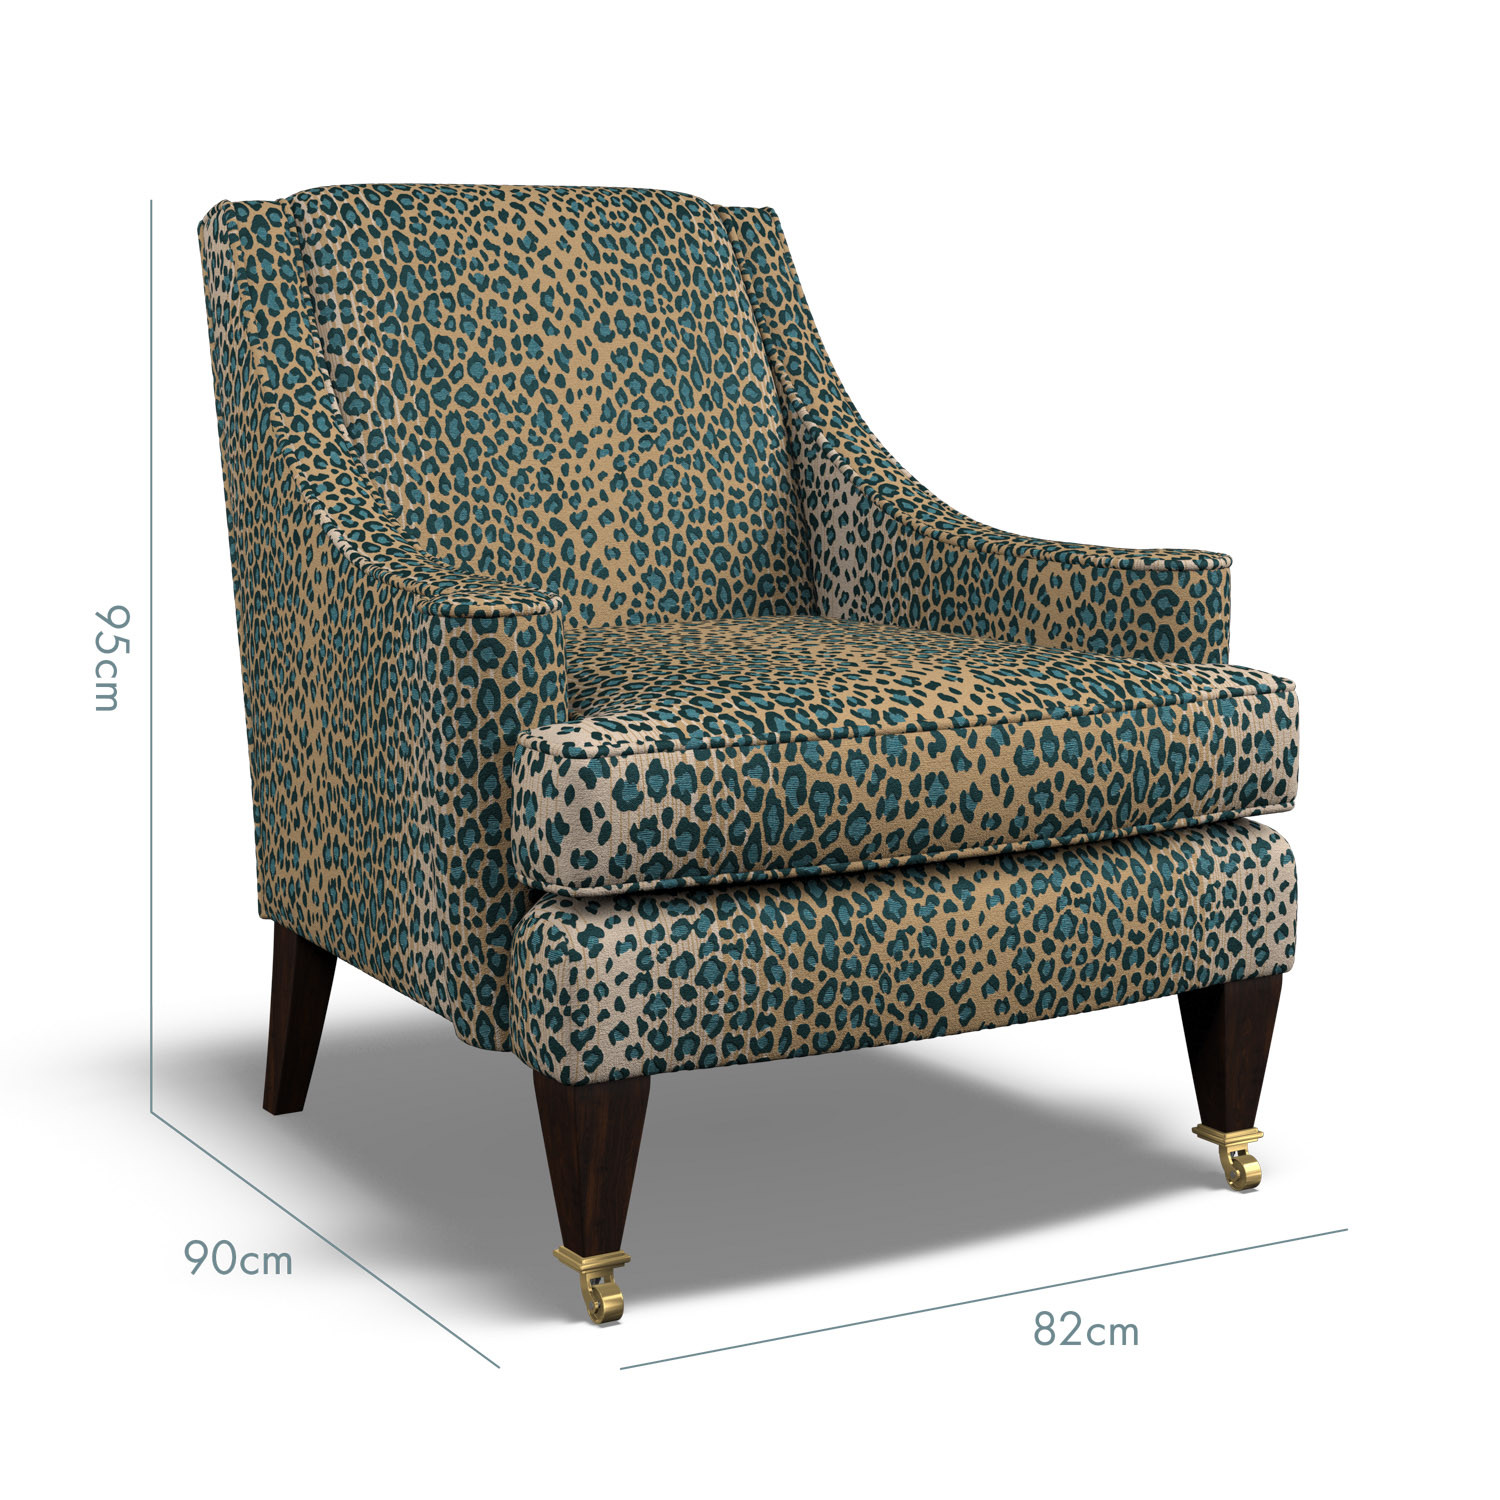 Brompton Chair Leopard Teal